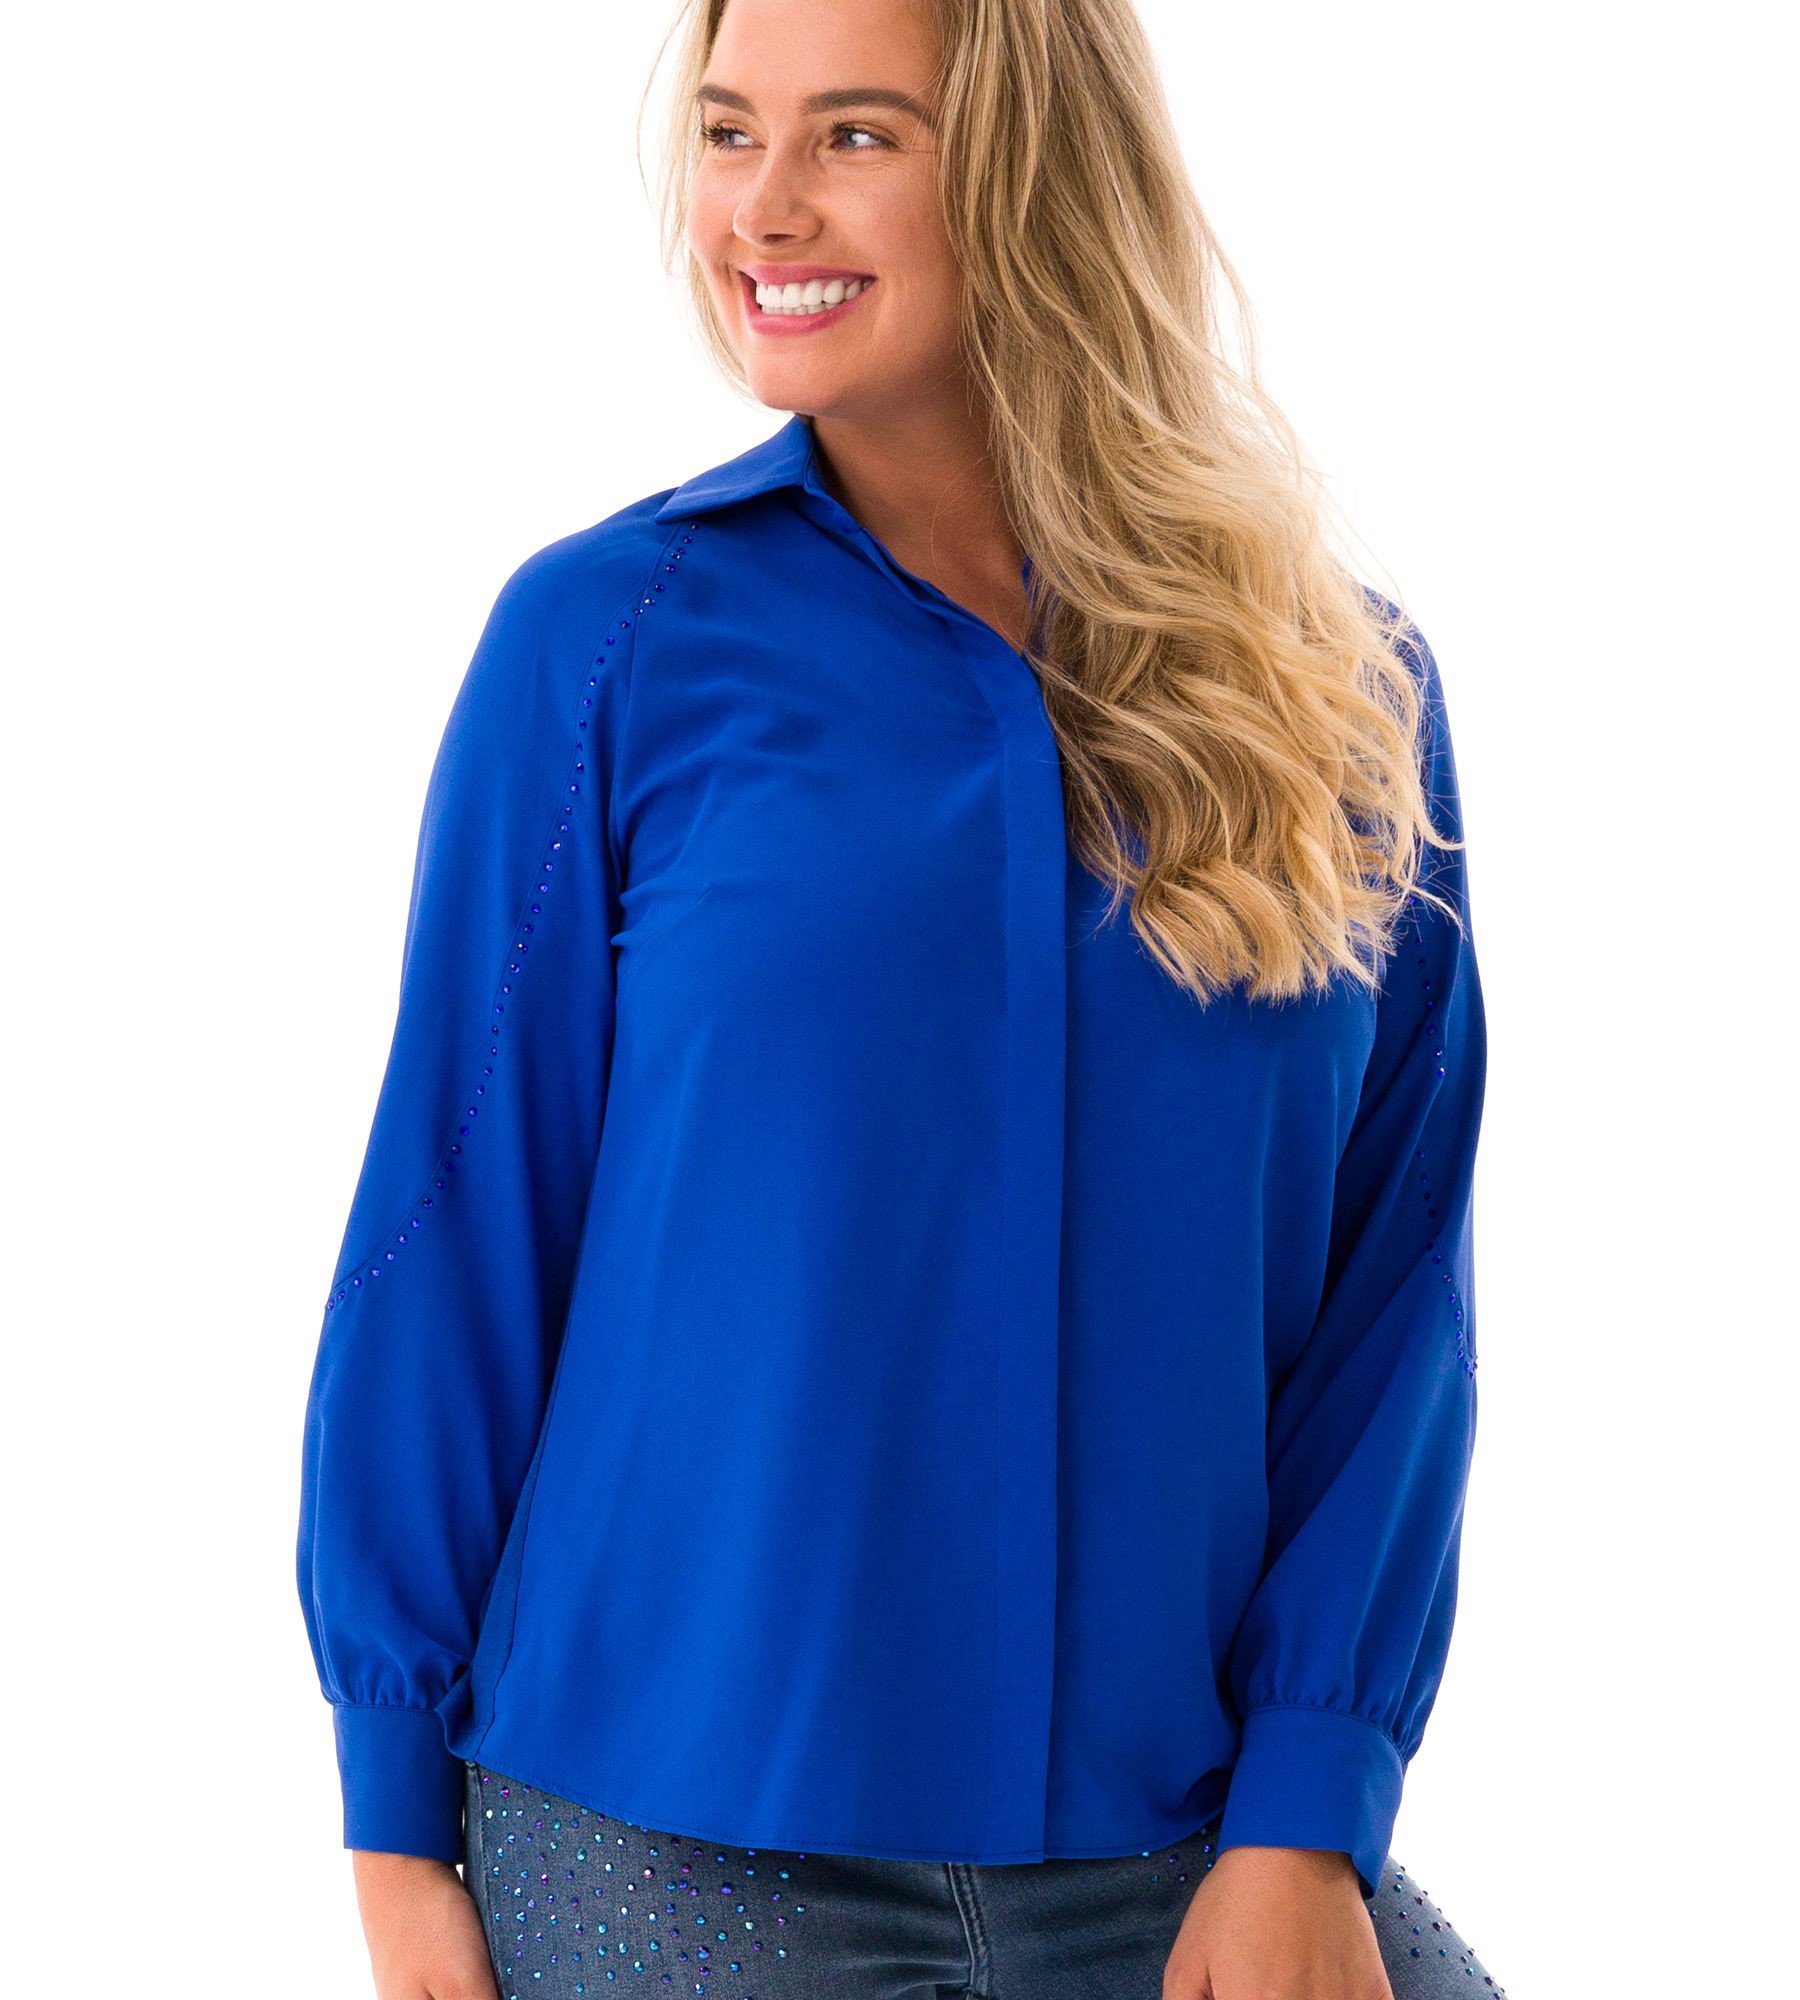 Bluse Hudson Blue - Alle Produkte - Fashion - Sarah Kern - Marken